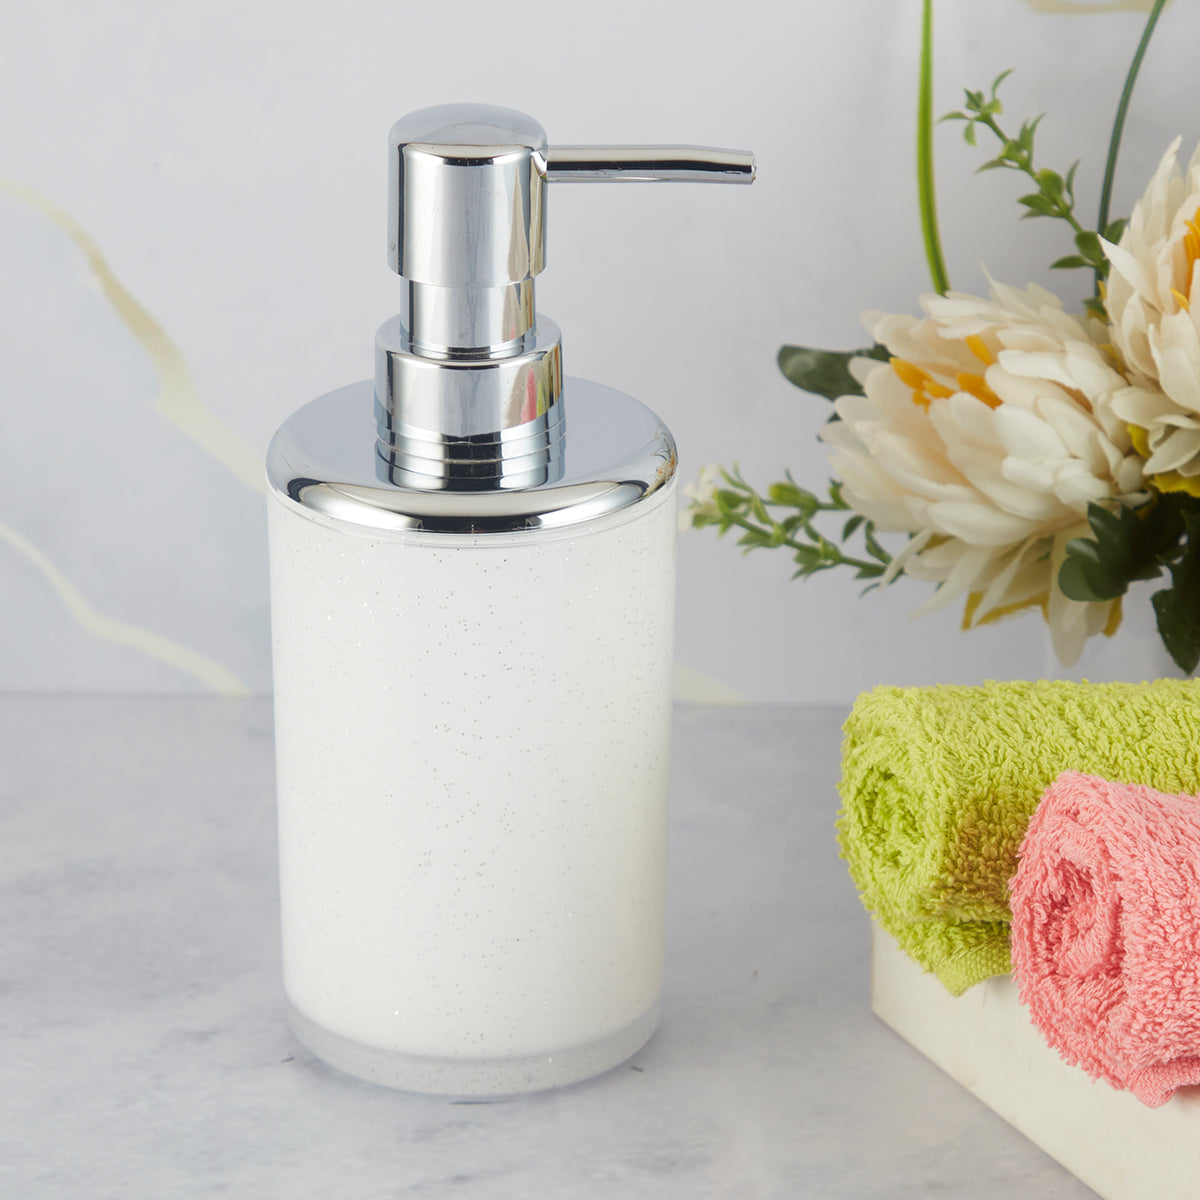 Acrylic Soap Dispenser Pump for Bathroom (10018)